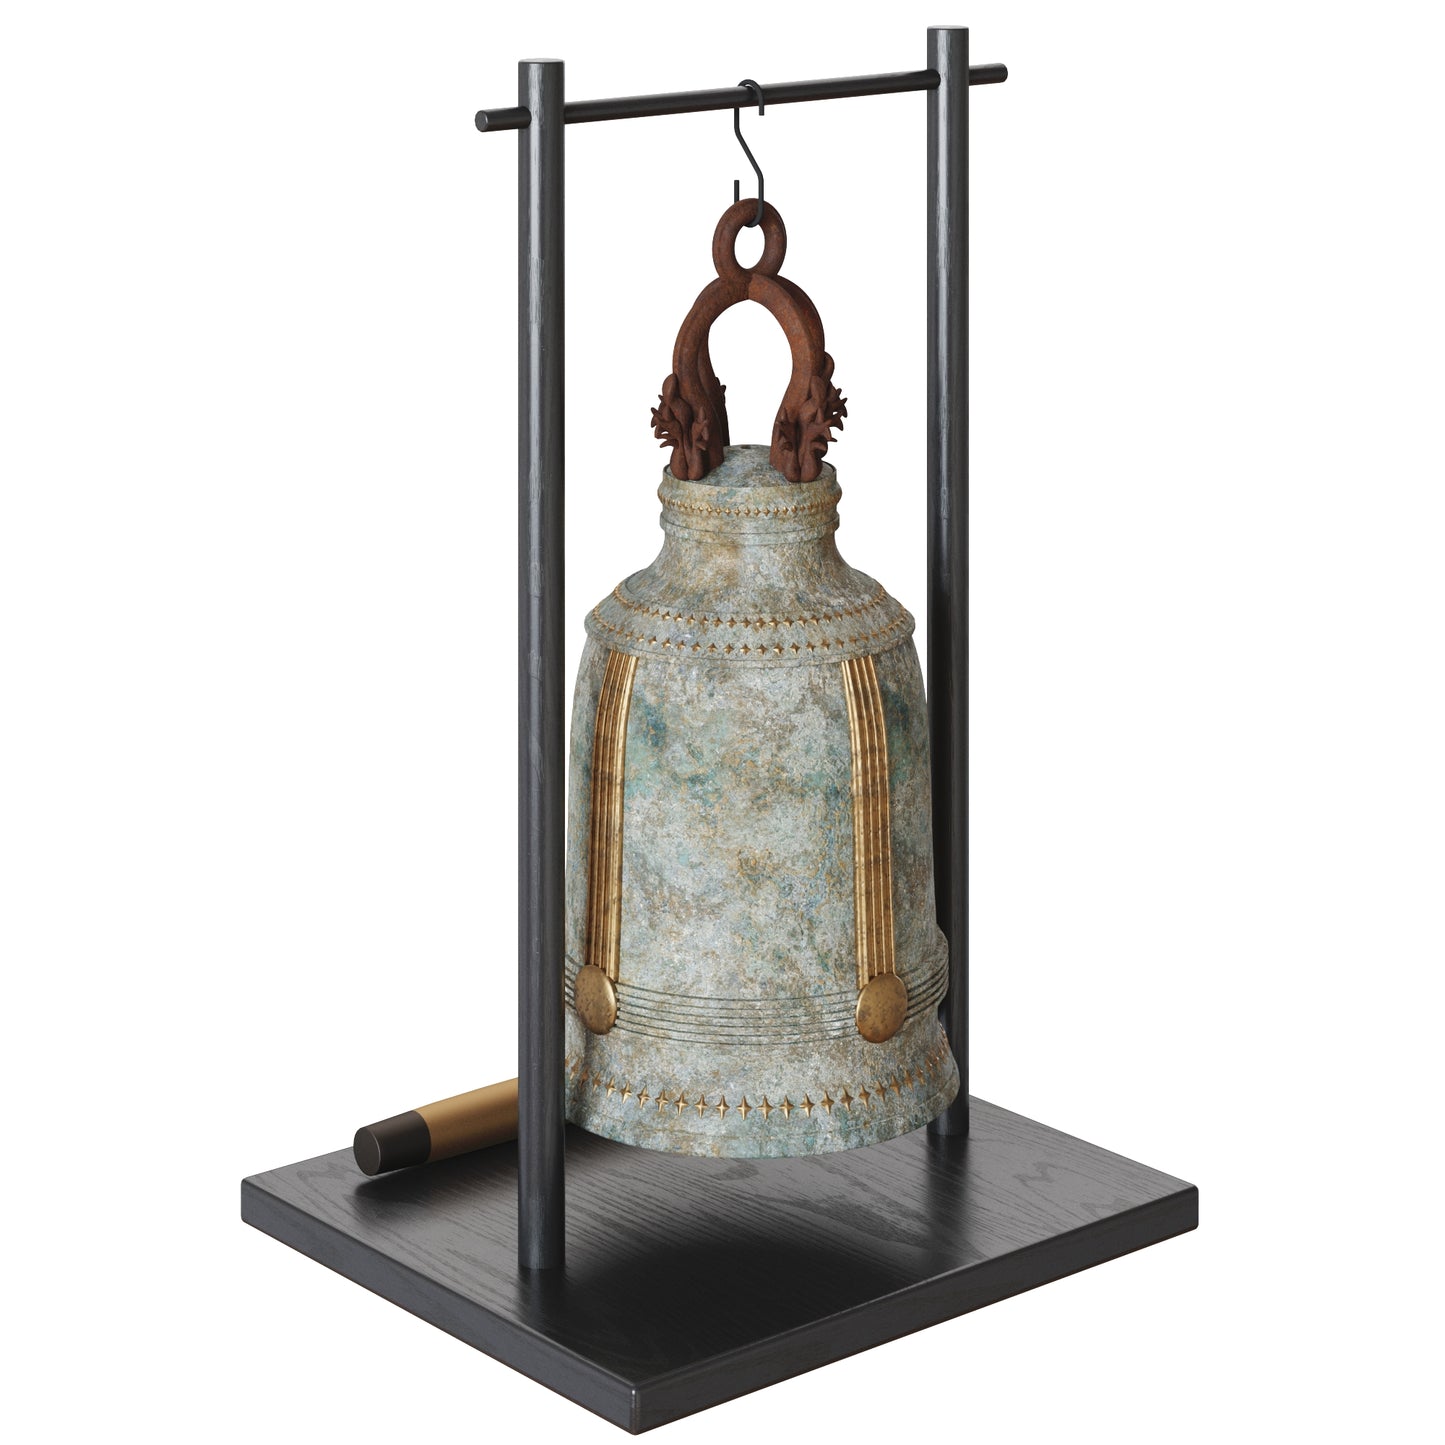 Rattanakosin period temple bell